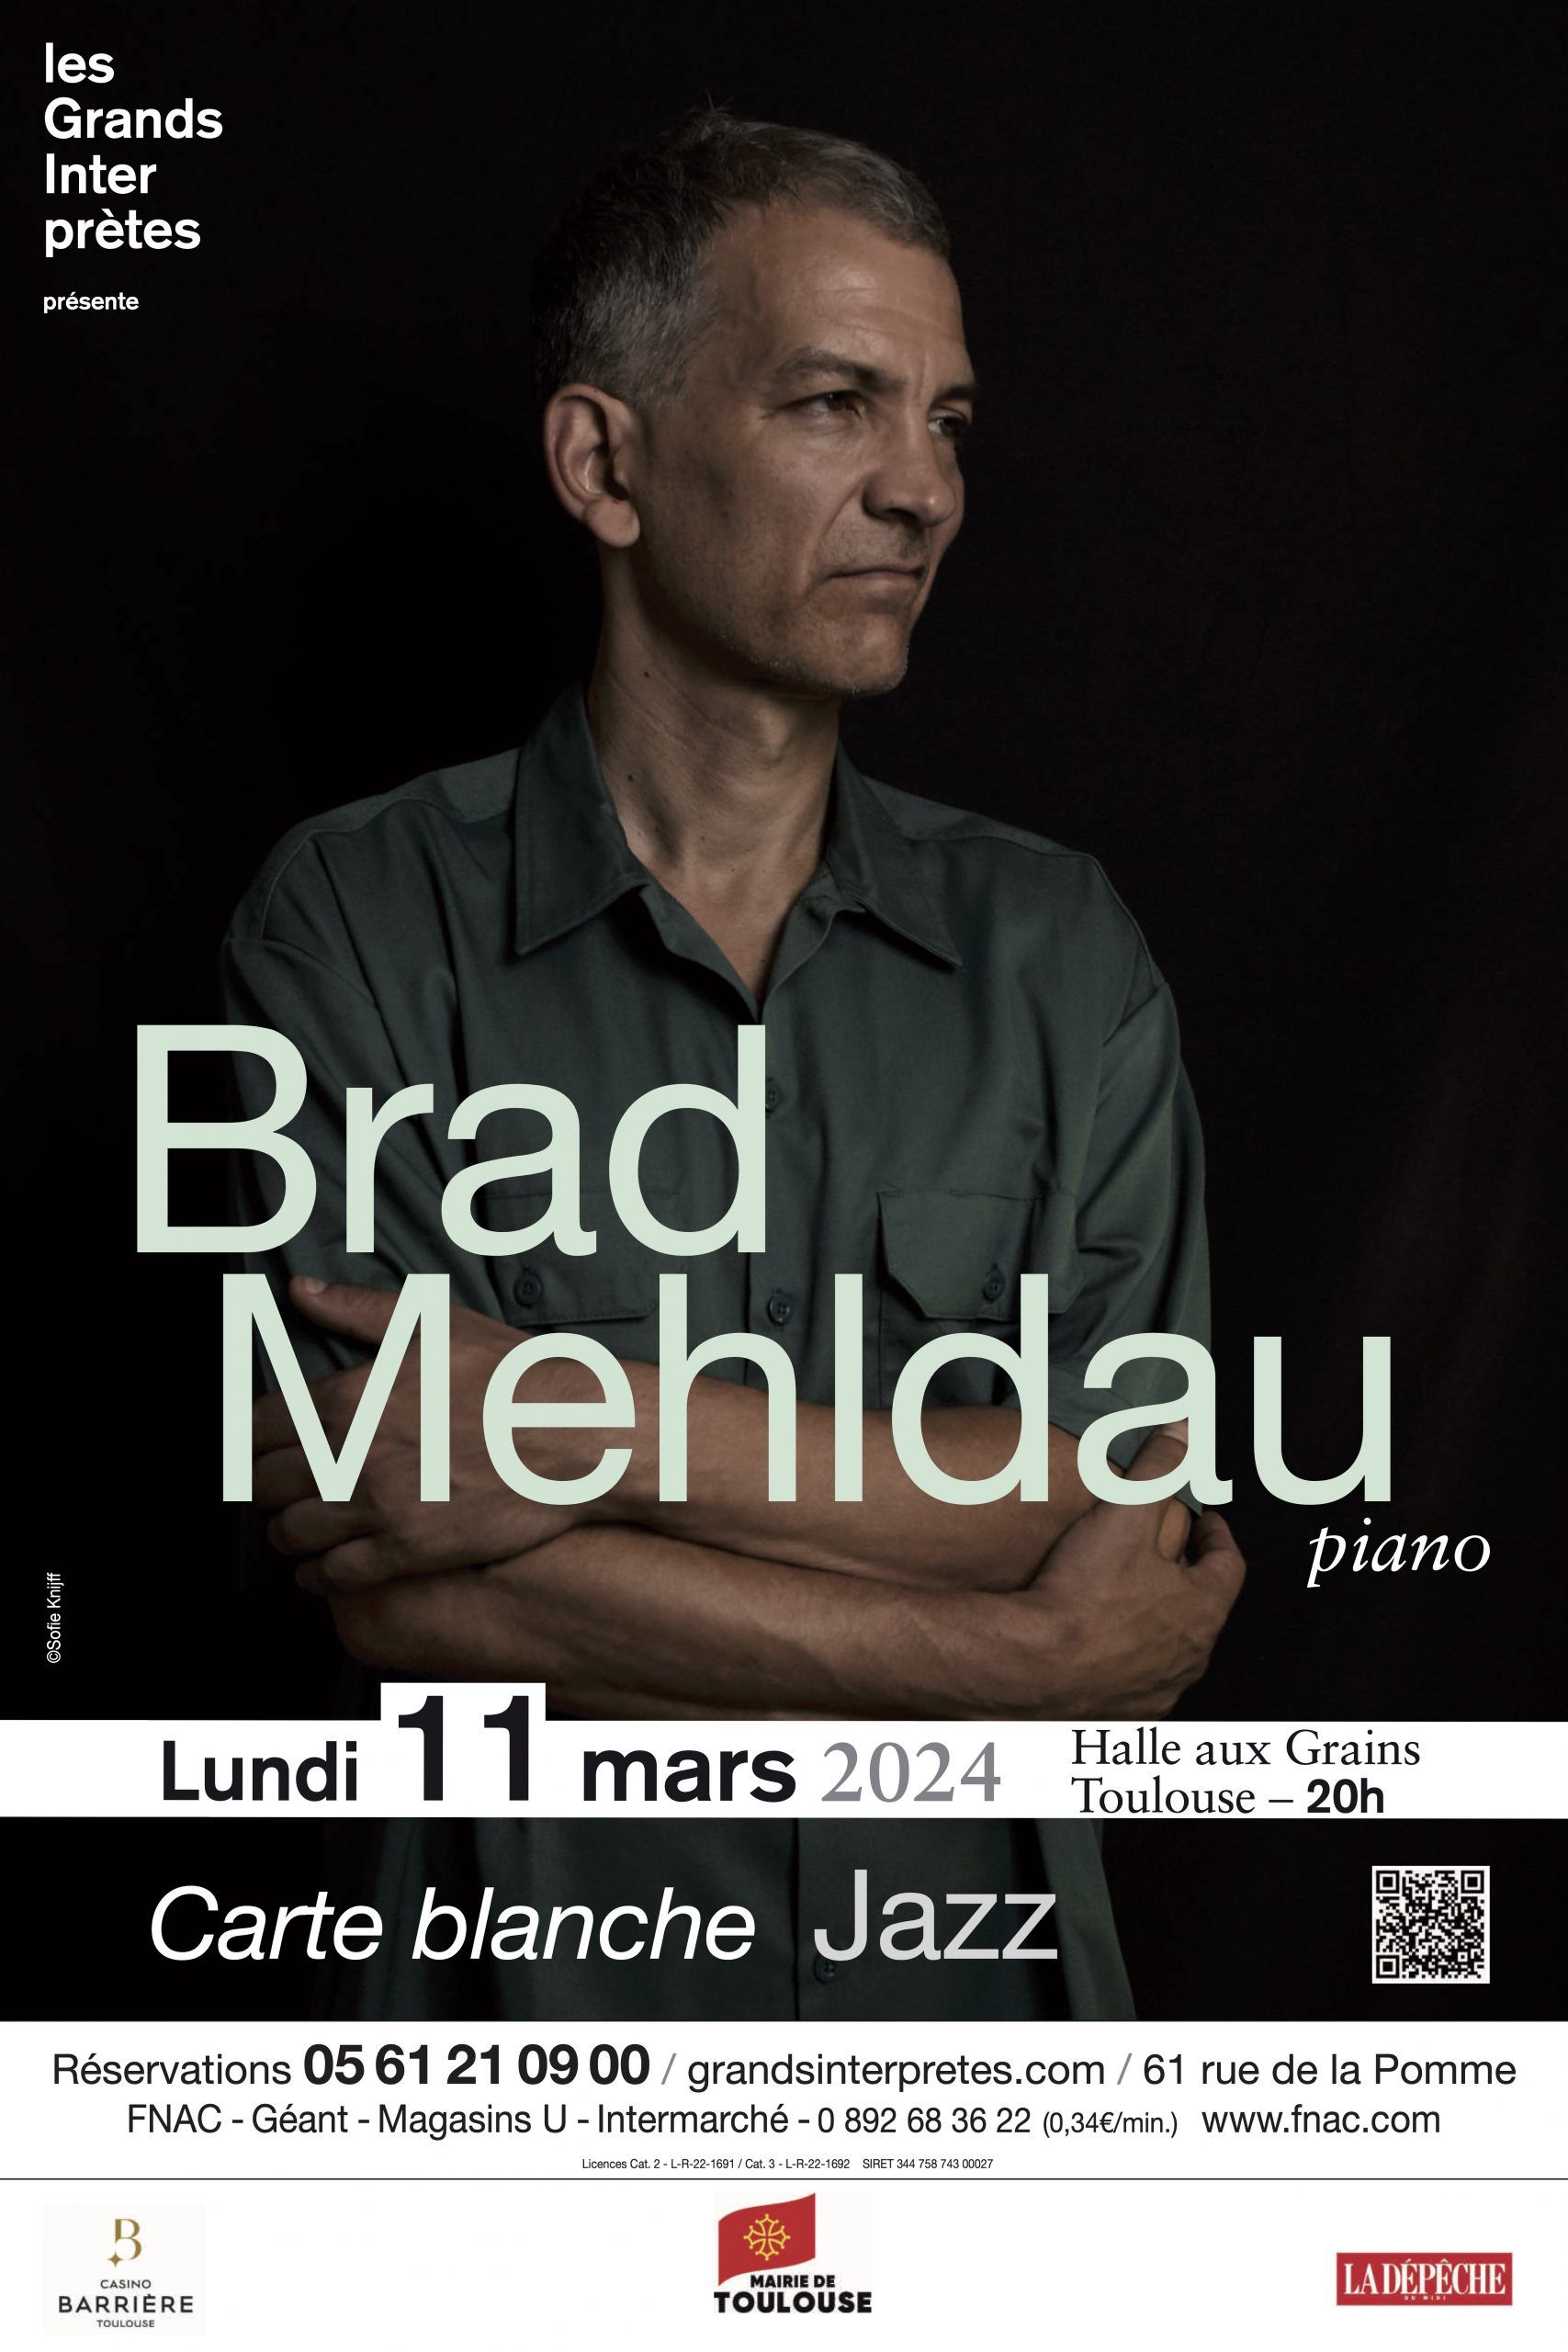 Les Grands Interprètes - Brad Mehldau